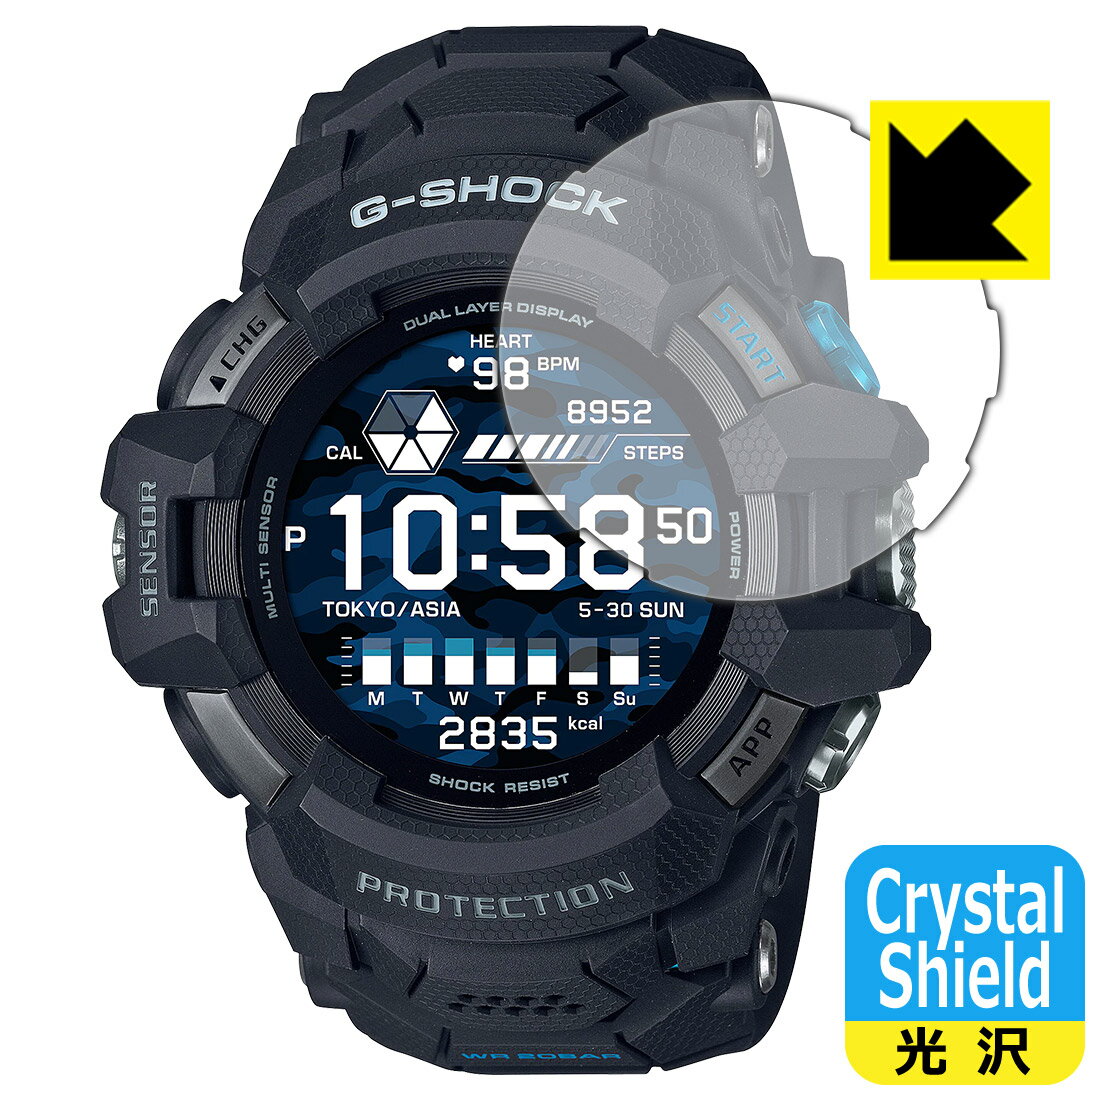 Crystal Shield G-SHOCK G-SQUAD PRO GSW-H1000シ